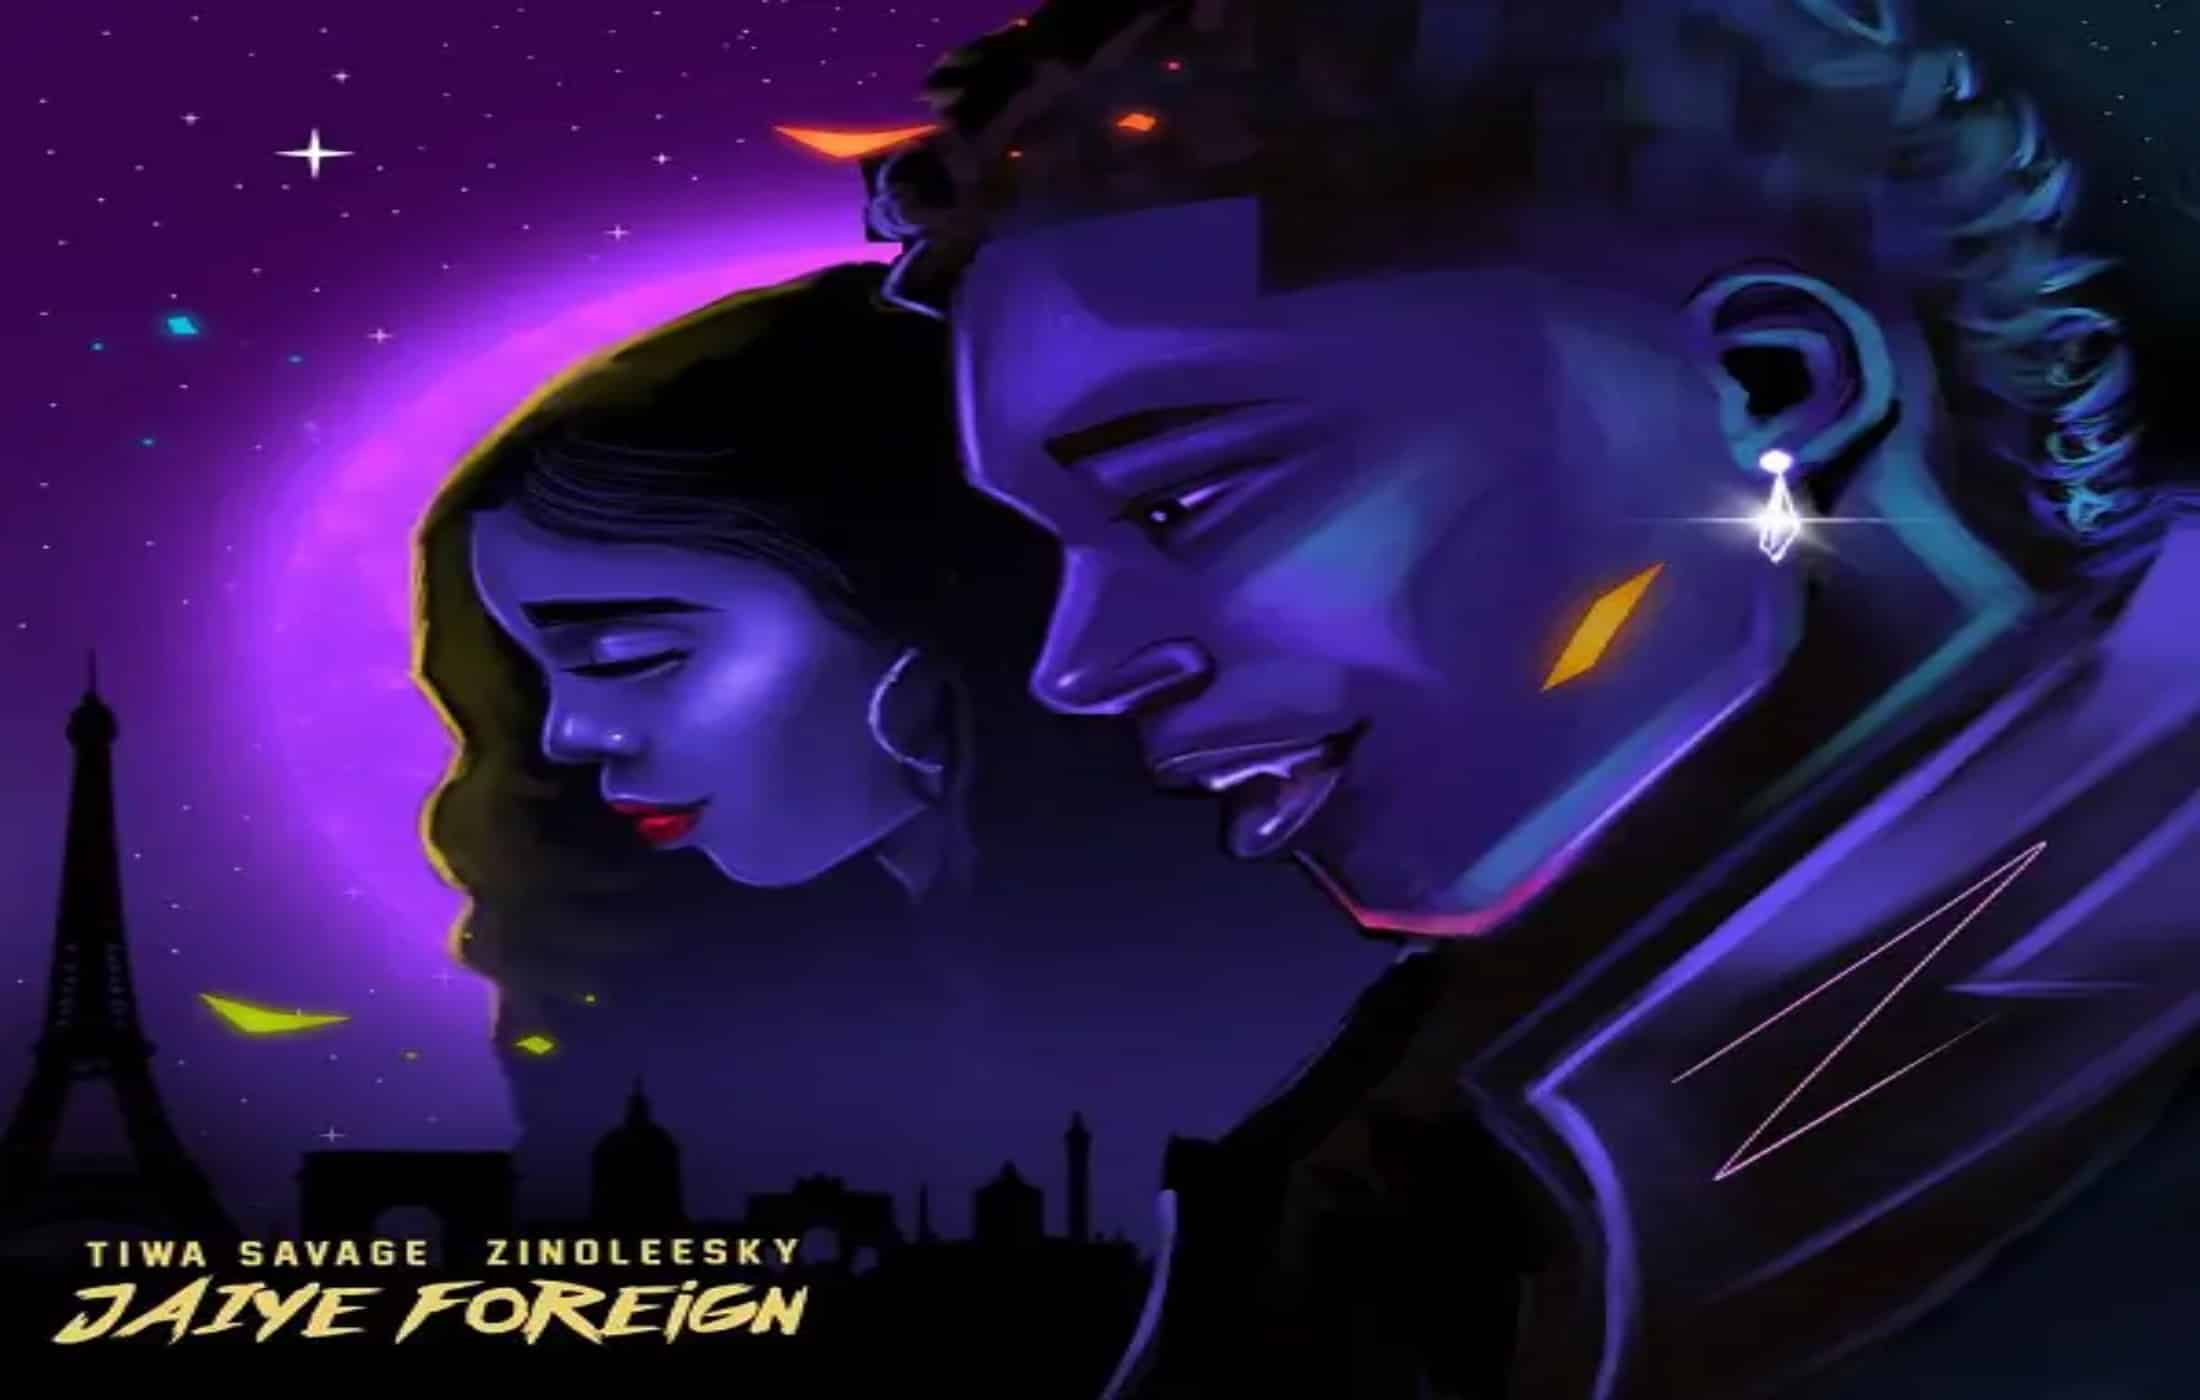 Lyrics of Jaiye Foreign by Tiwa Savage ft Zinoleesky